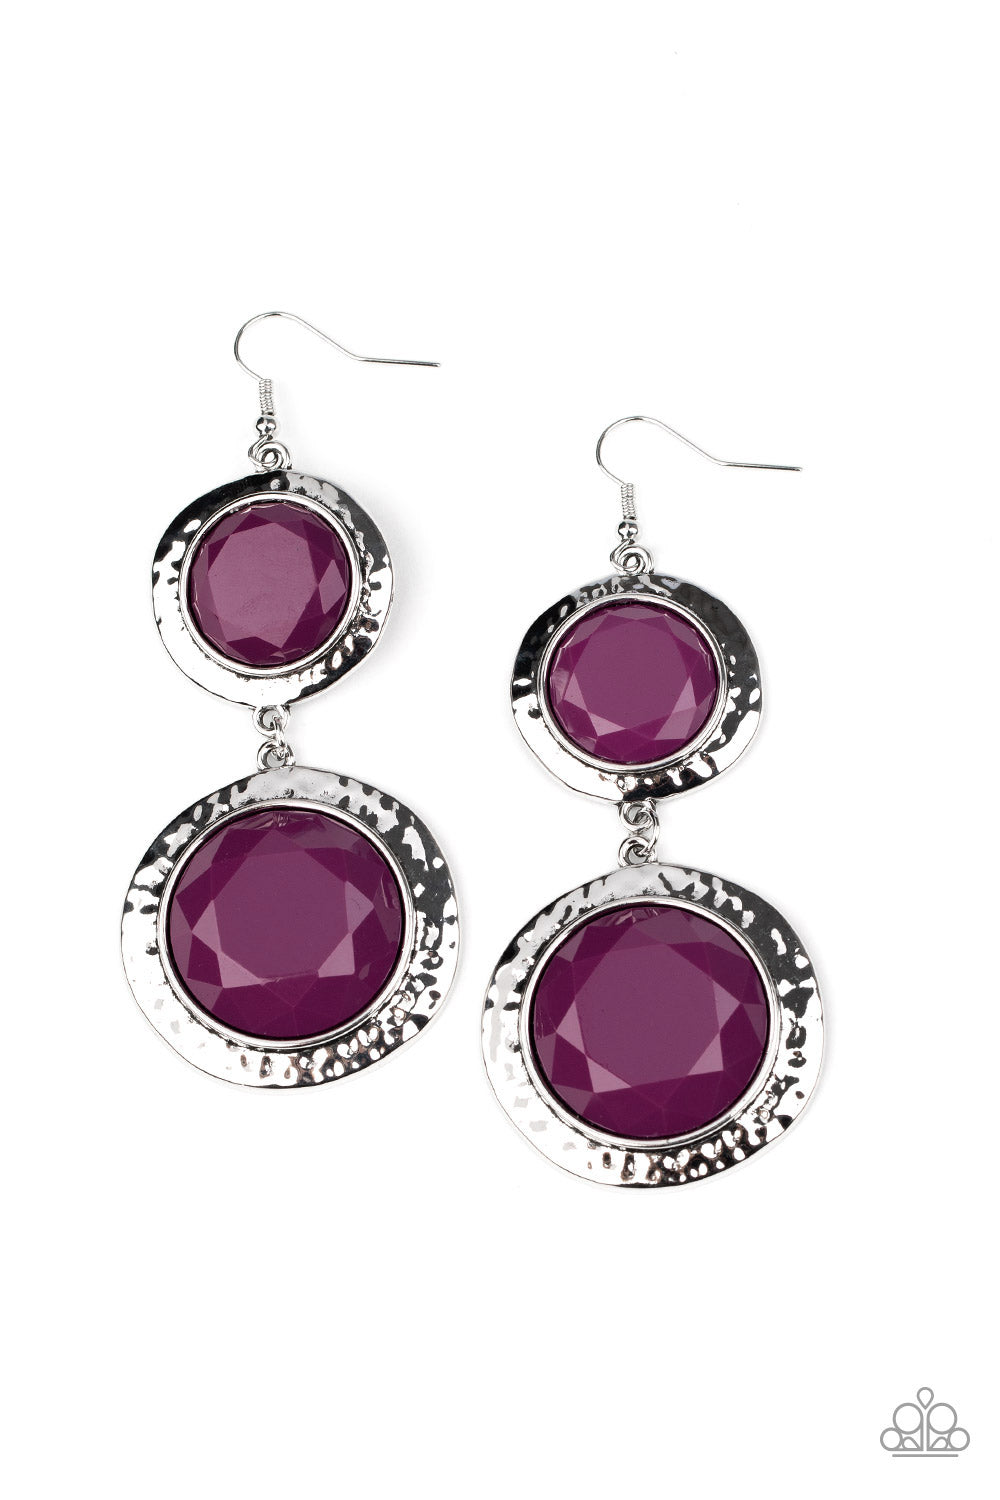 Thrift Shop Stop - purple - Paparazzi earrings